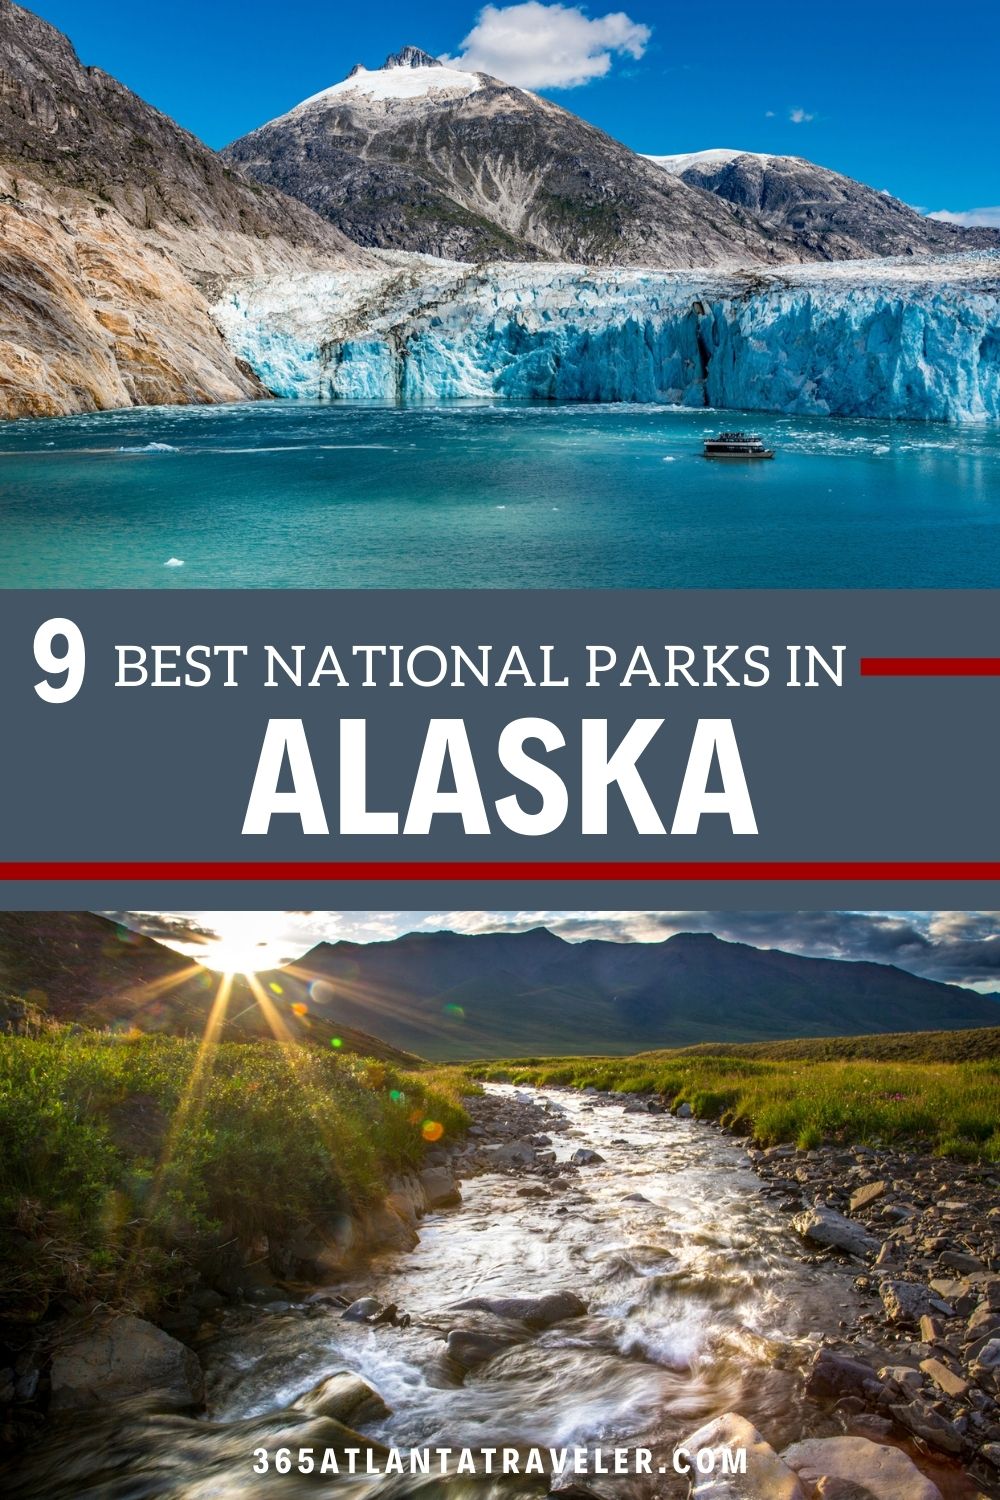 9 ALASKA NATIONAL PARKS YOU'VE GOT TO EXPLORE